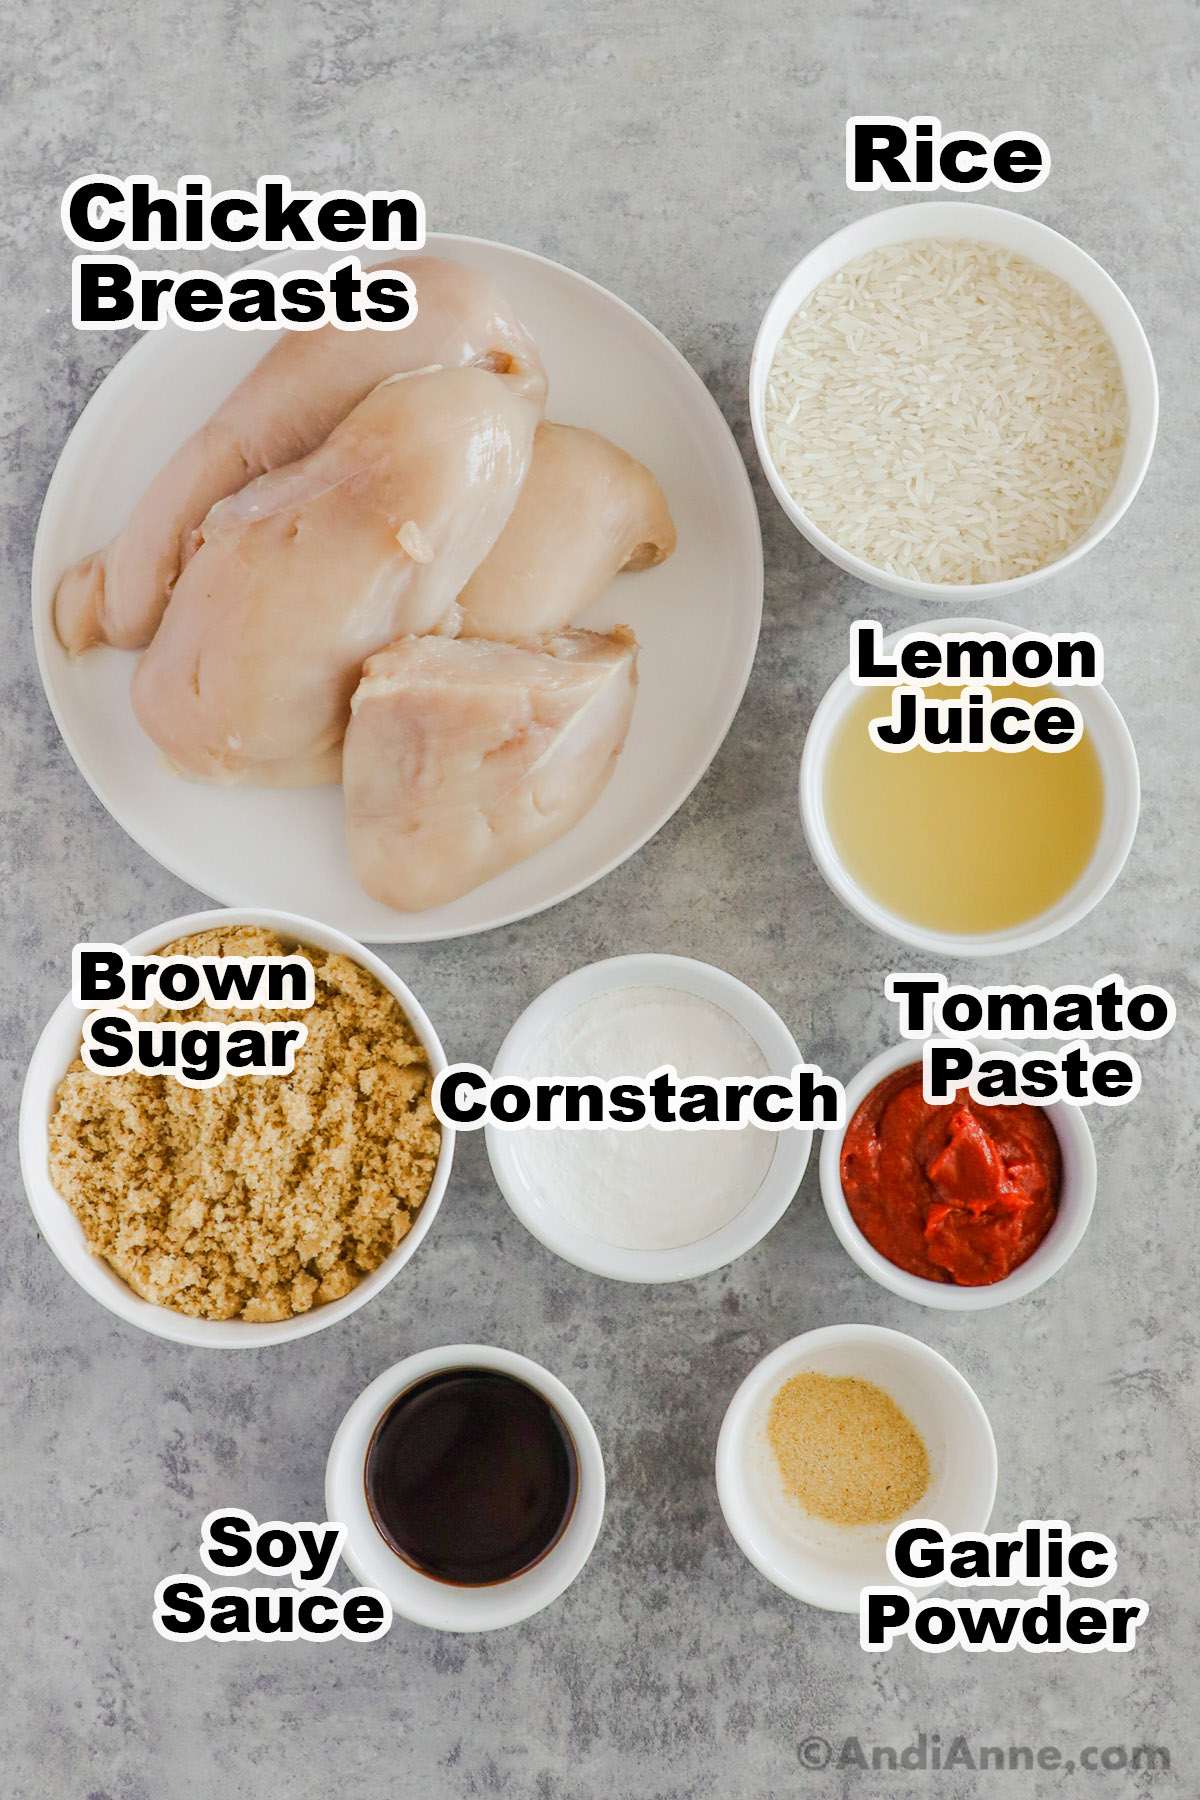 Recipe ingredients including bowls of lemon juice, brown sugar, cornstarch, tomato paste, soy sauce, garlic powder and raw chicken breasts